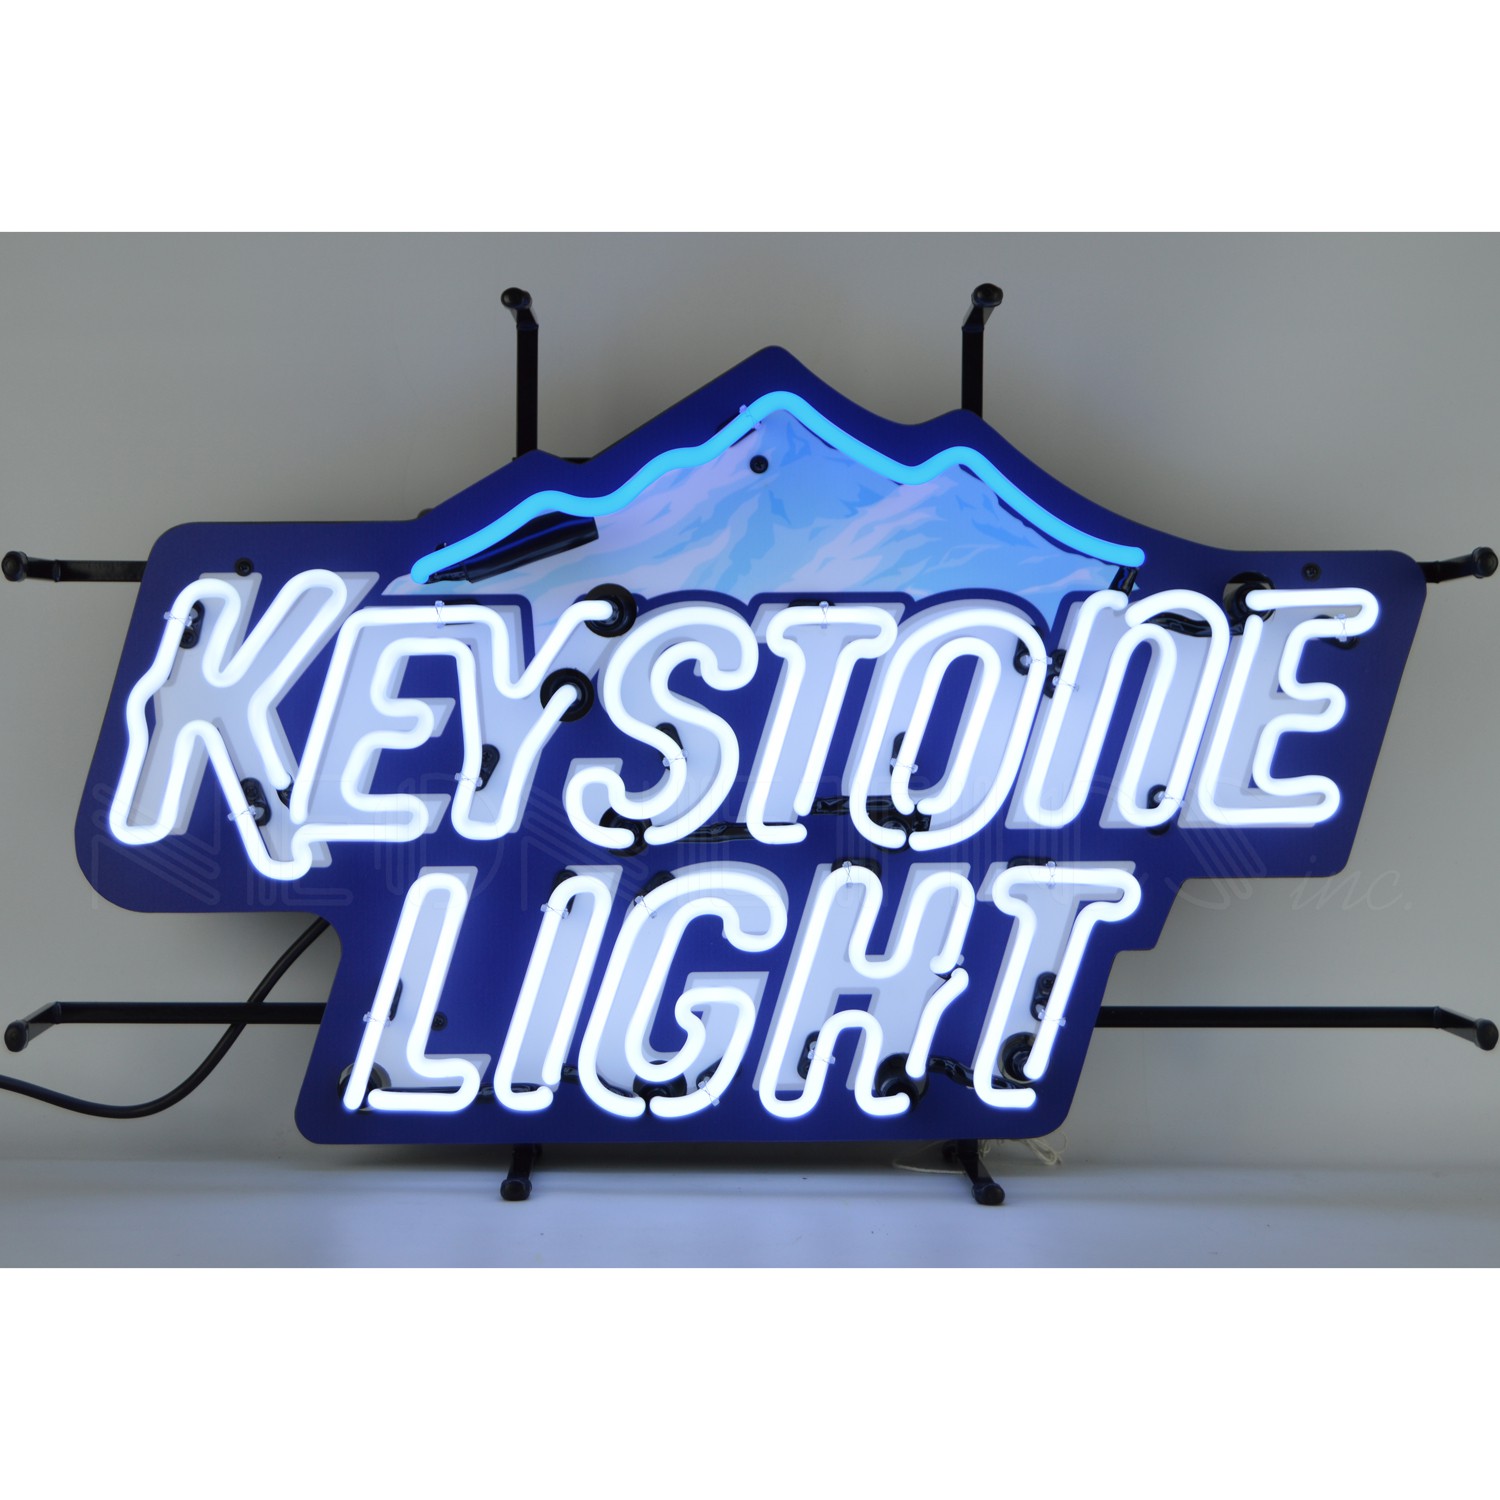 Keystone Light Neon Sign